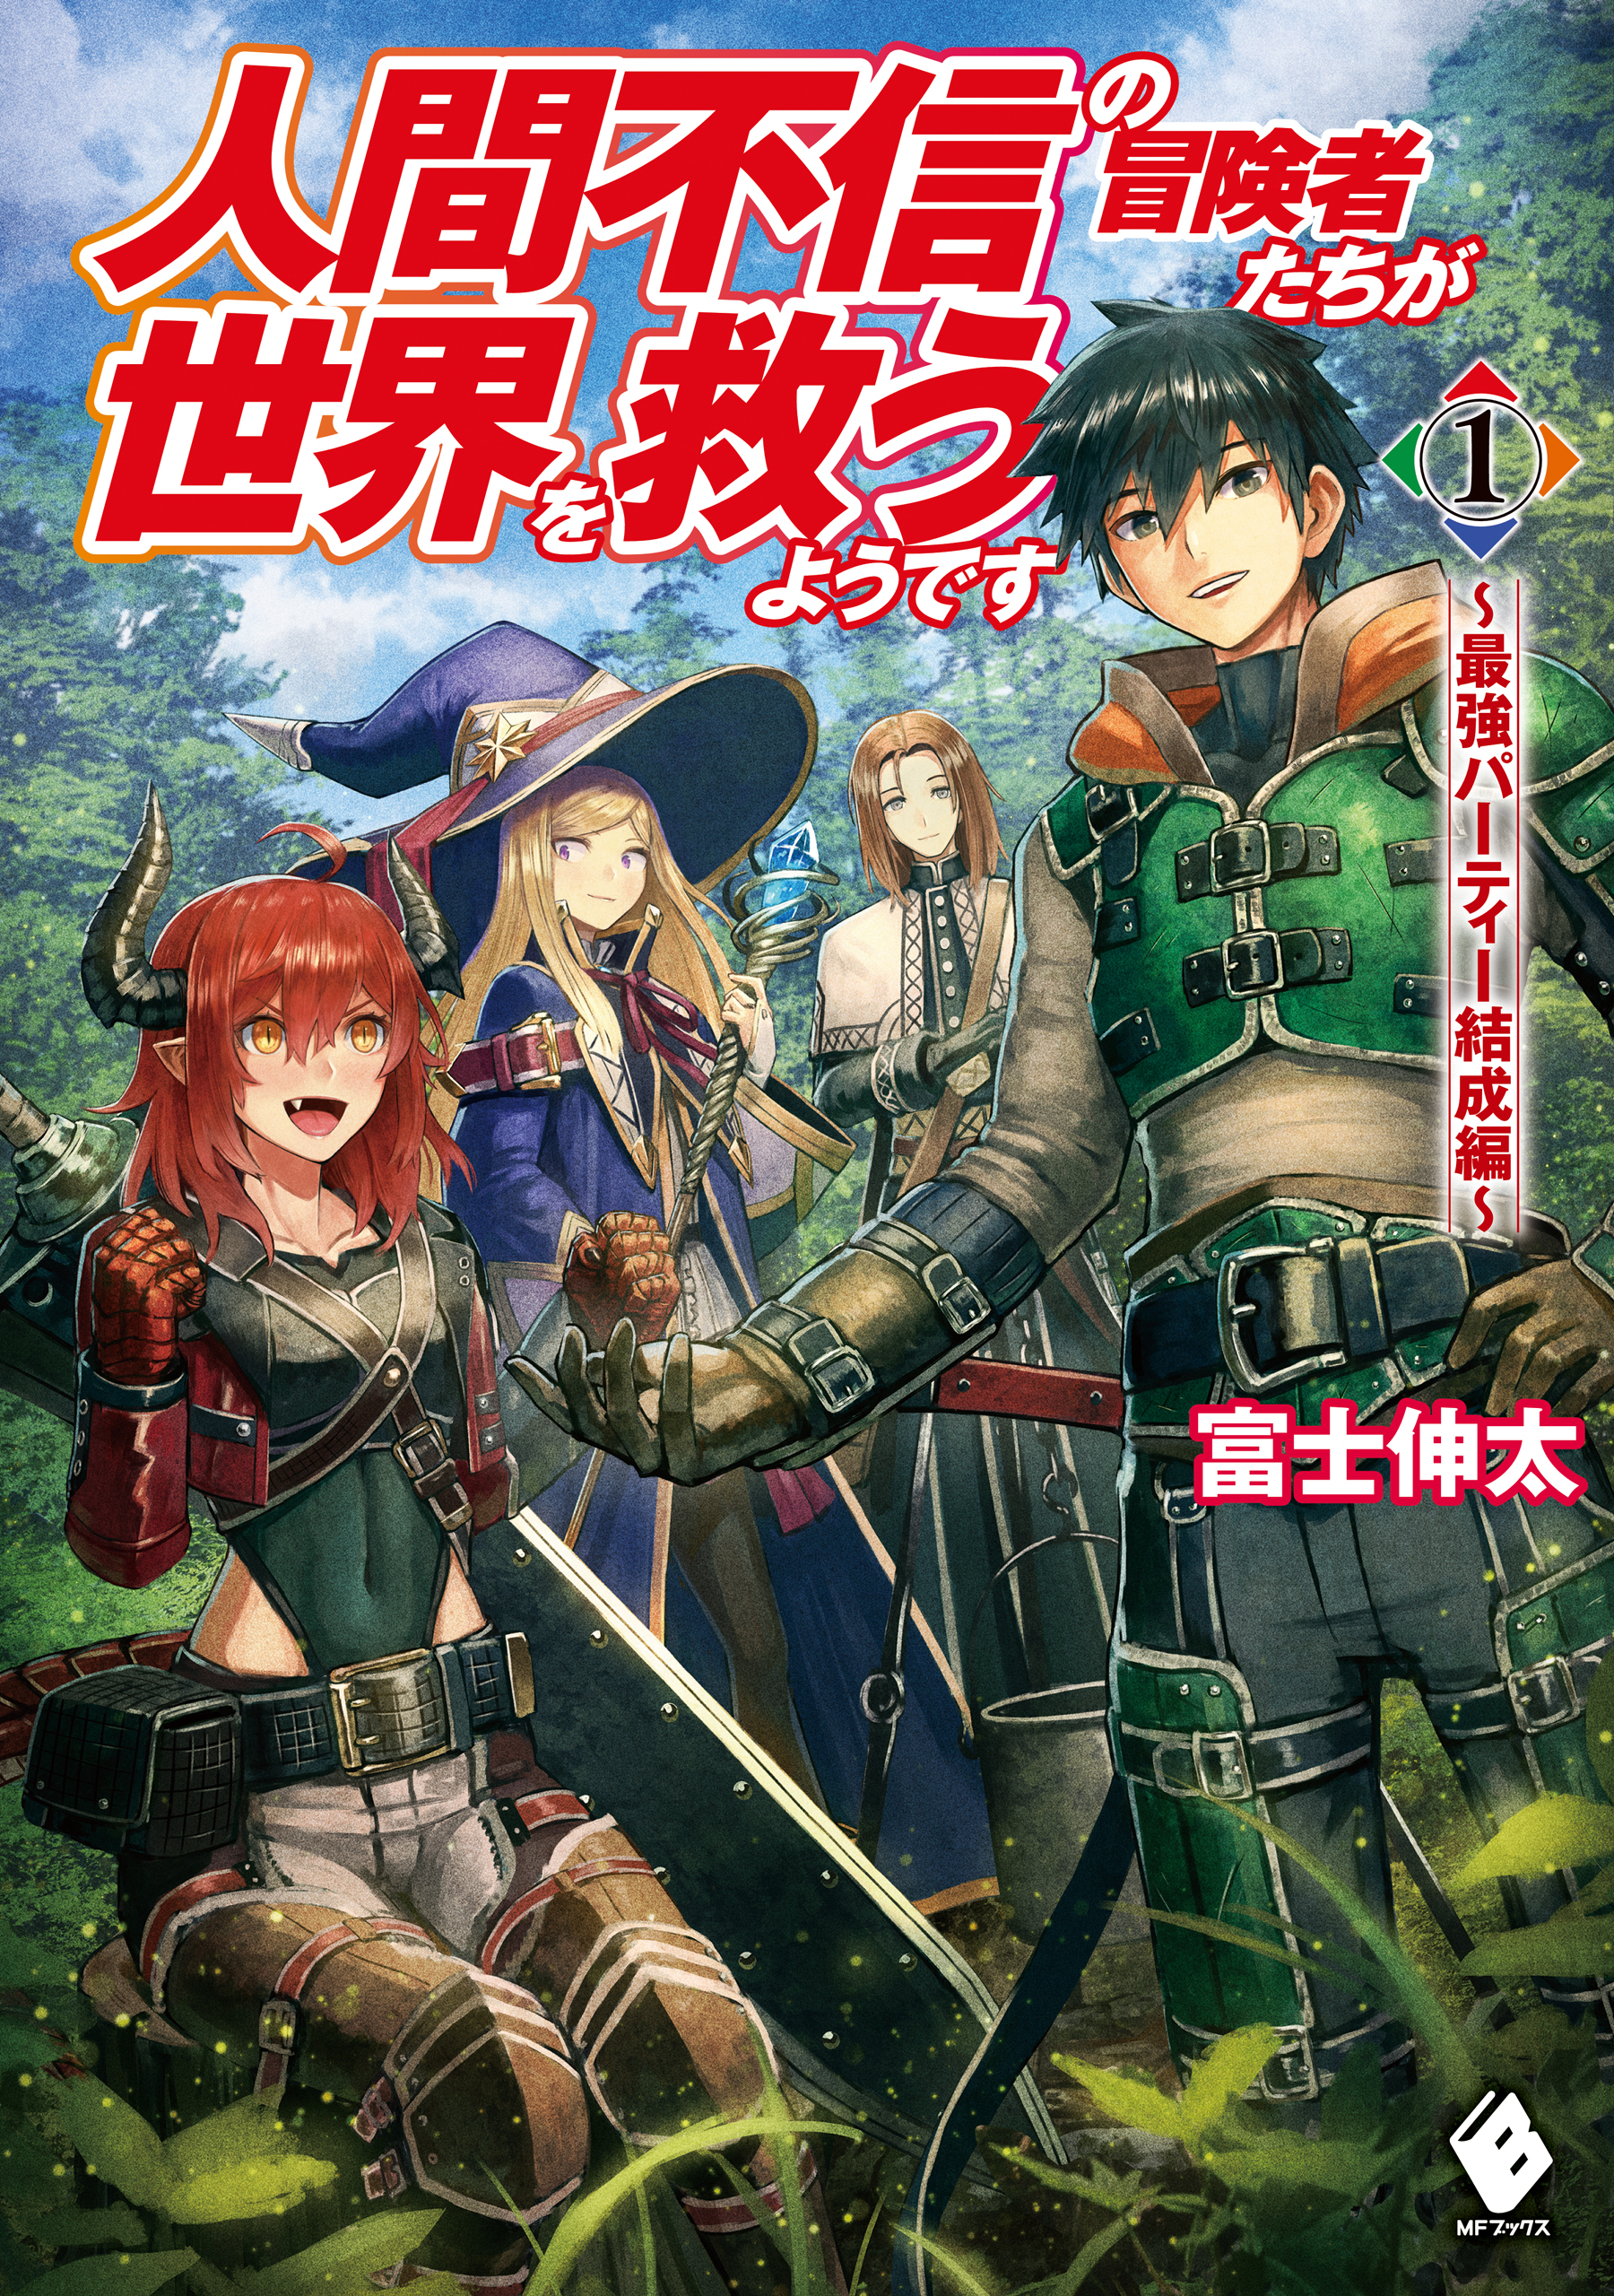 Chiyu Maho and Ningen Fushin no Boukensha-tachi Light Novels to